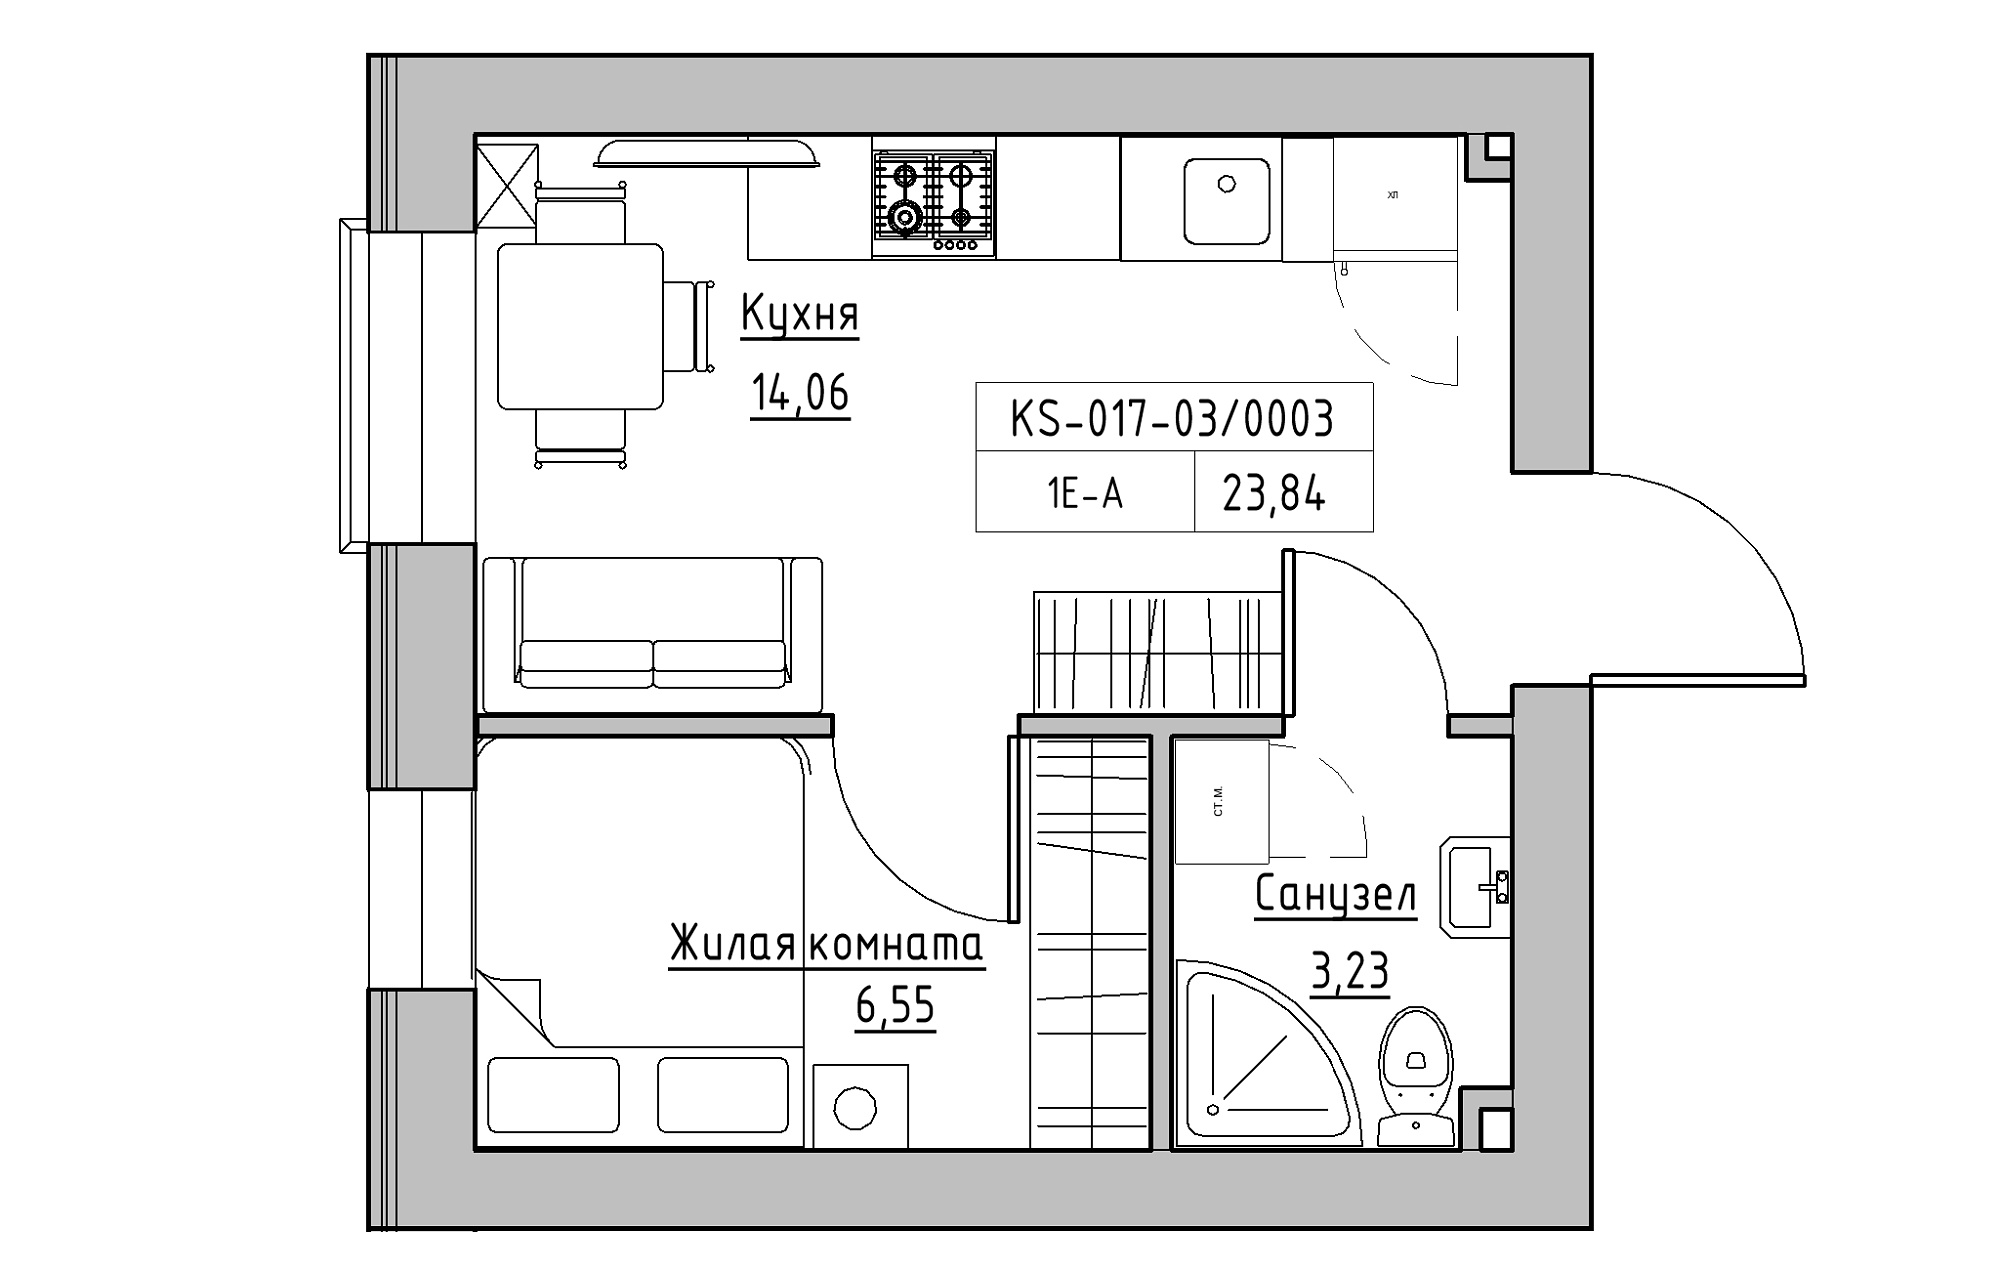 Planning 1-rm flats area 23.84m2, KS-017-03/0003.